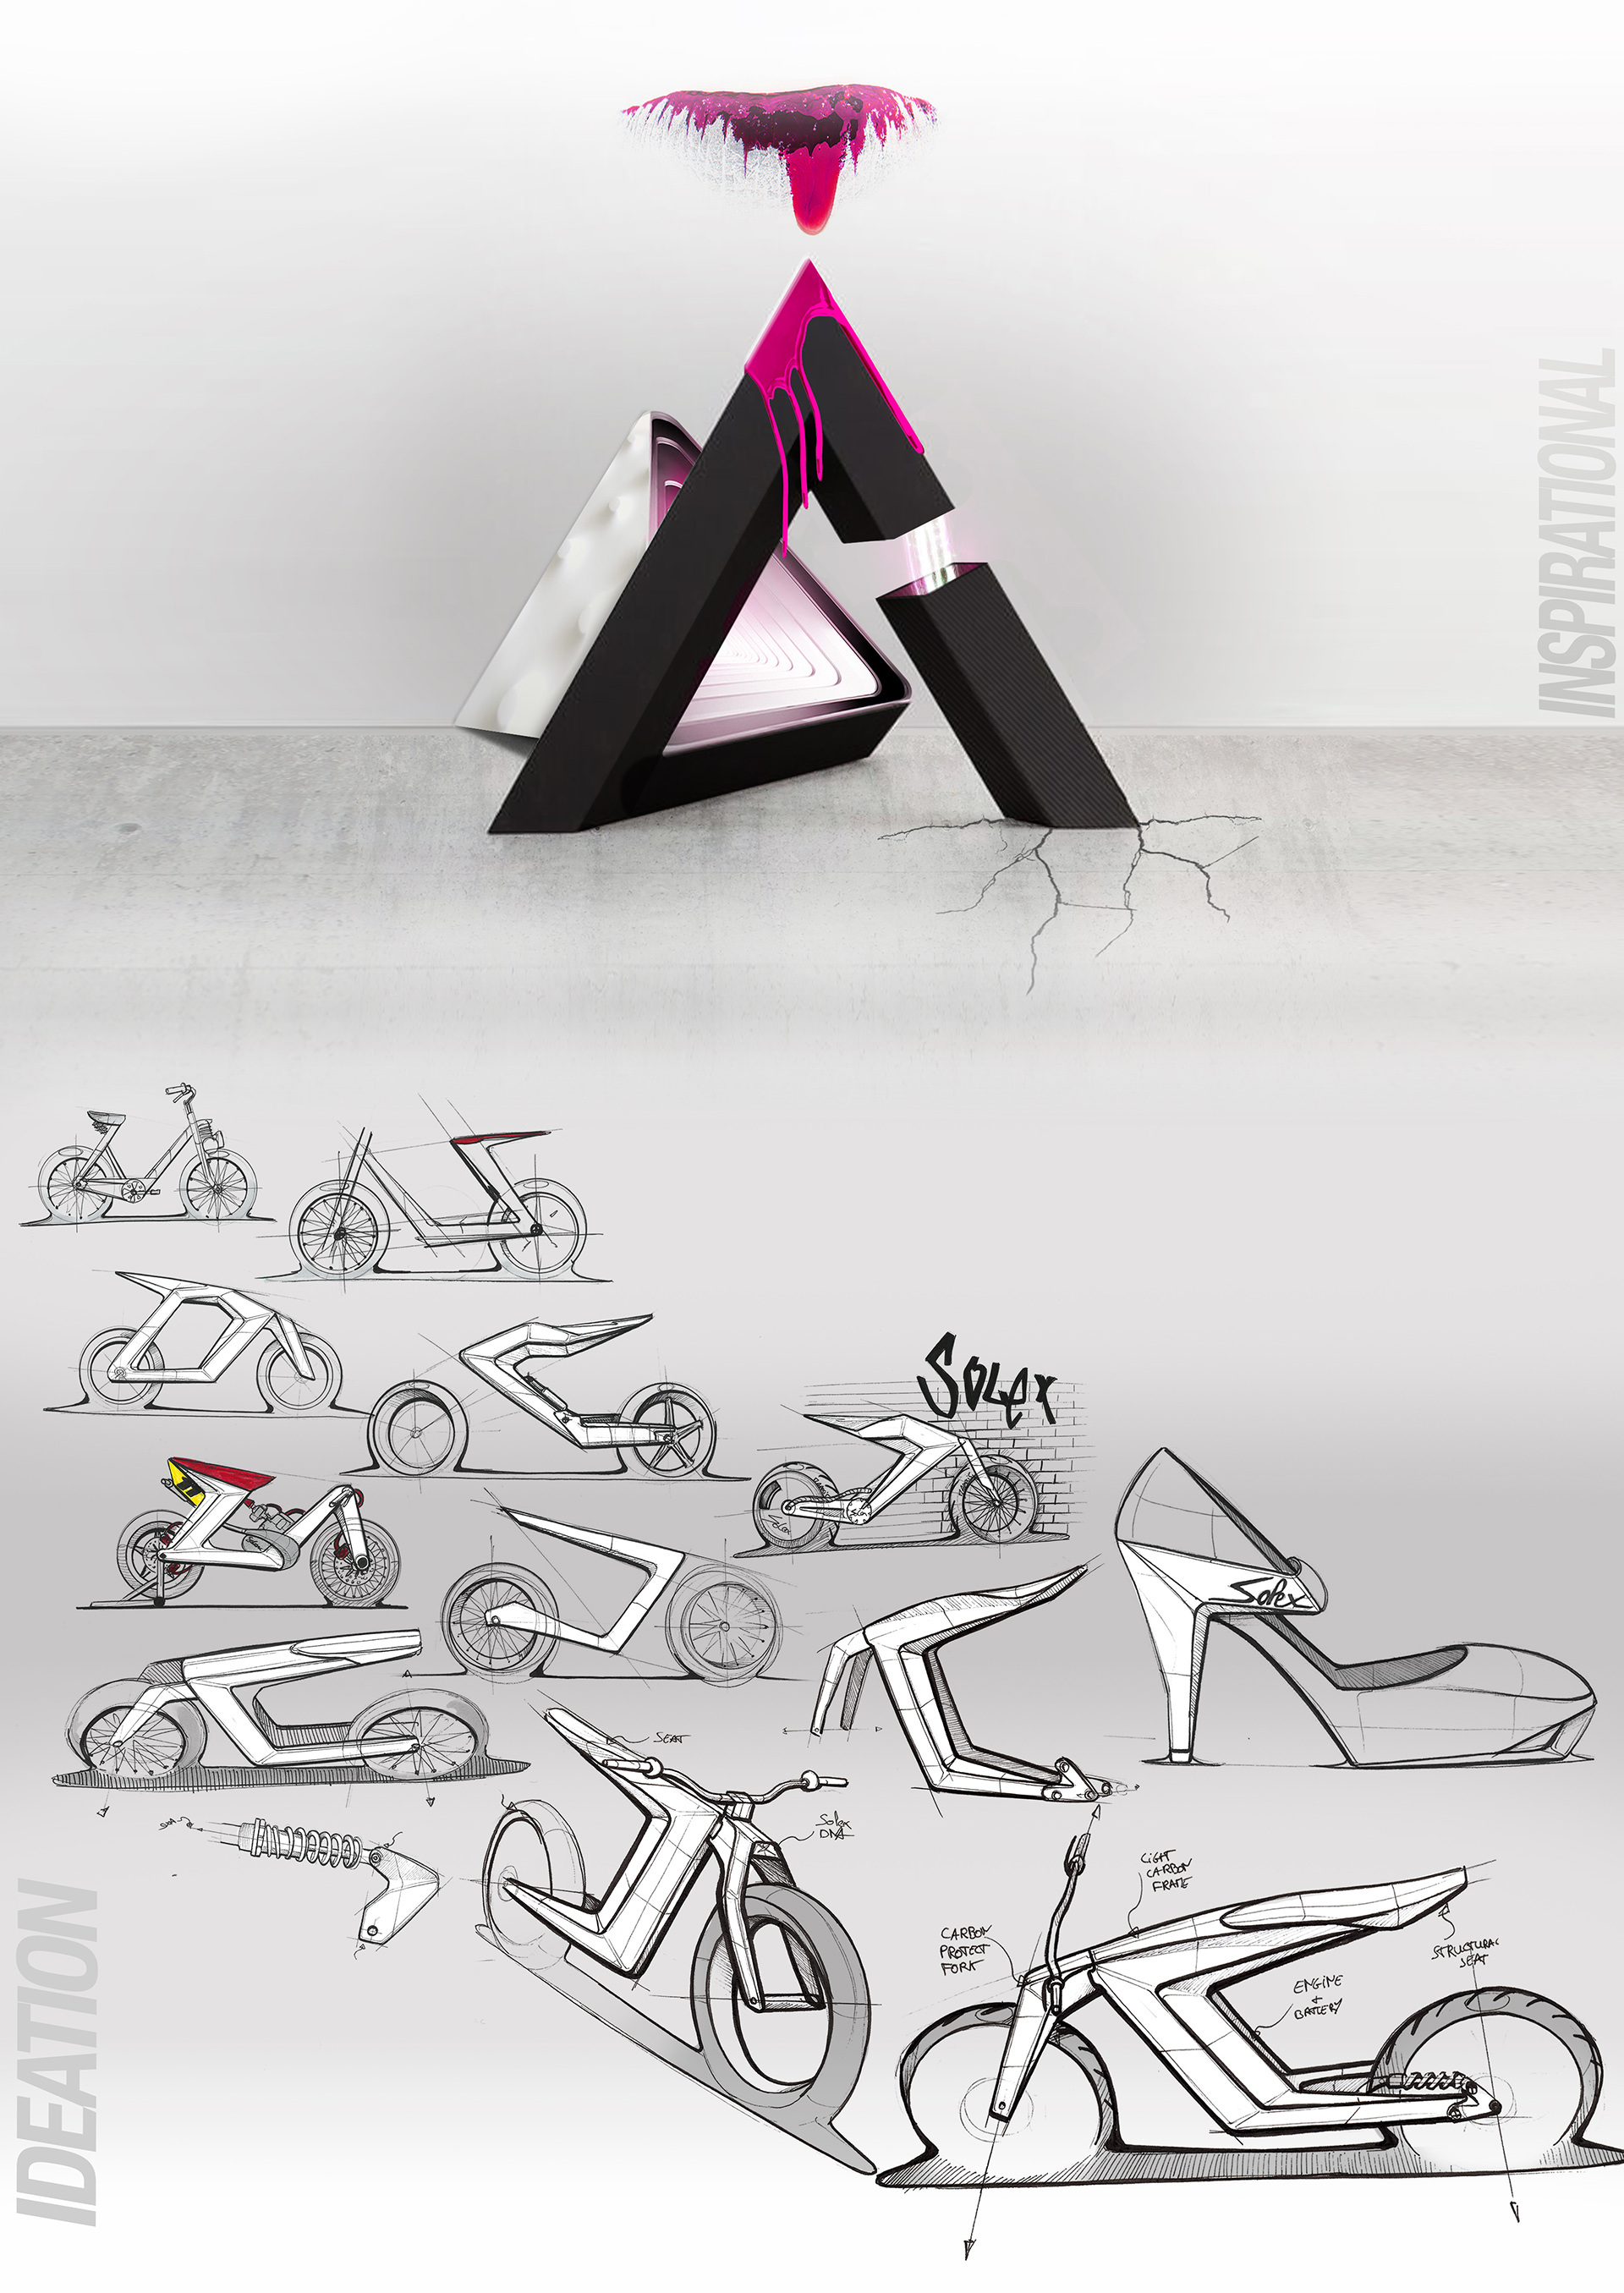 solex //概念自行车——街头艺术的体现!